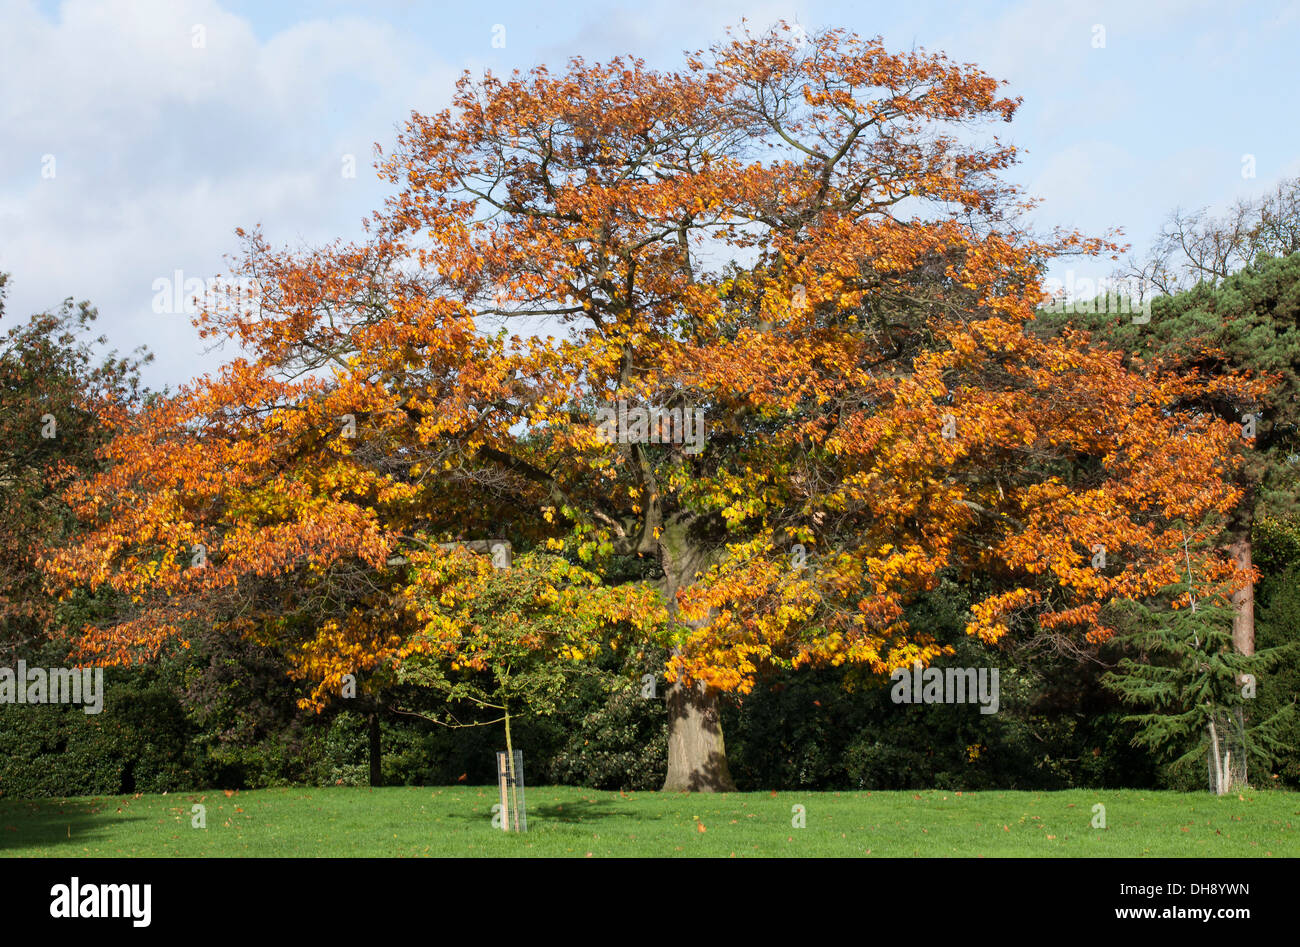 oak tree autumn